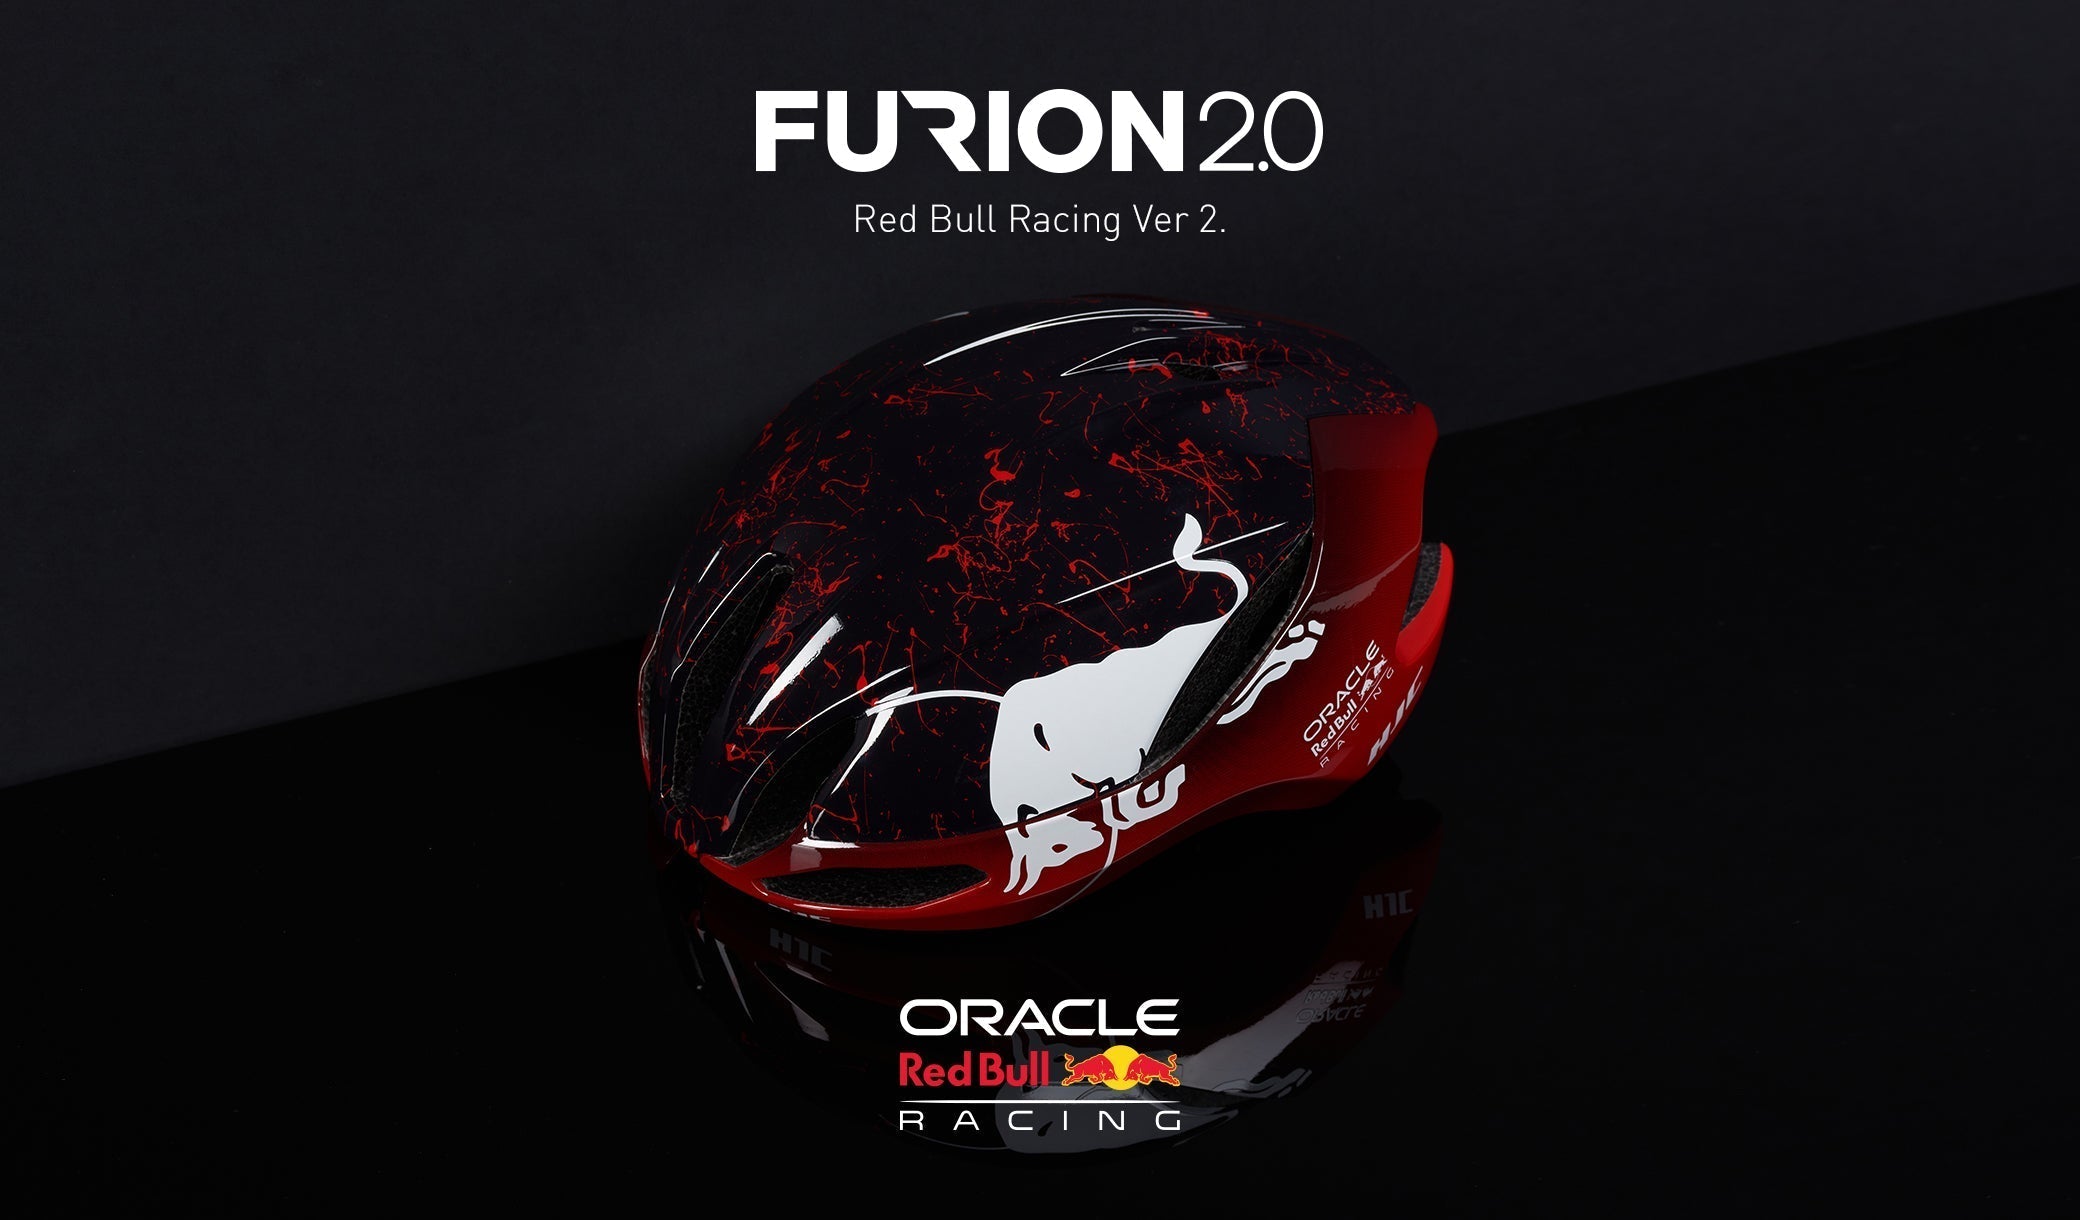 FURION 2.0 ORACLE REDBULL RACING VER2